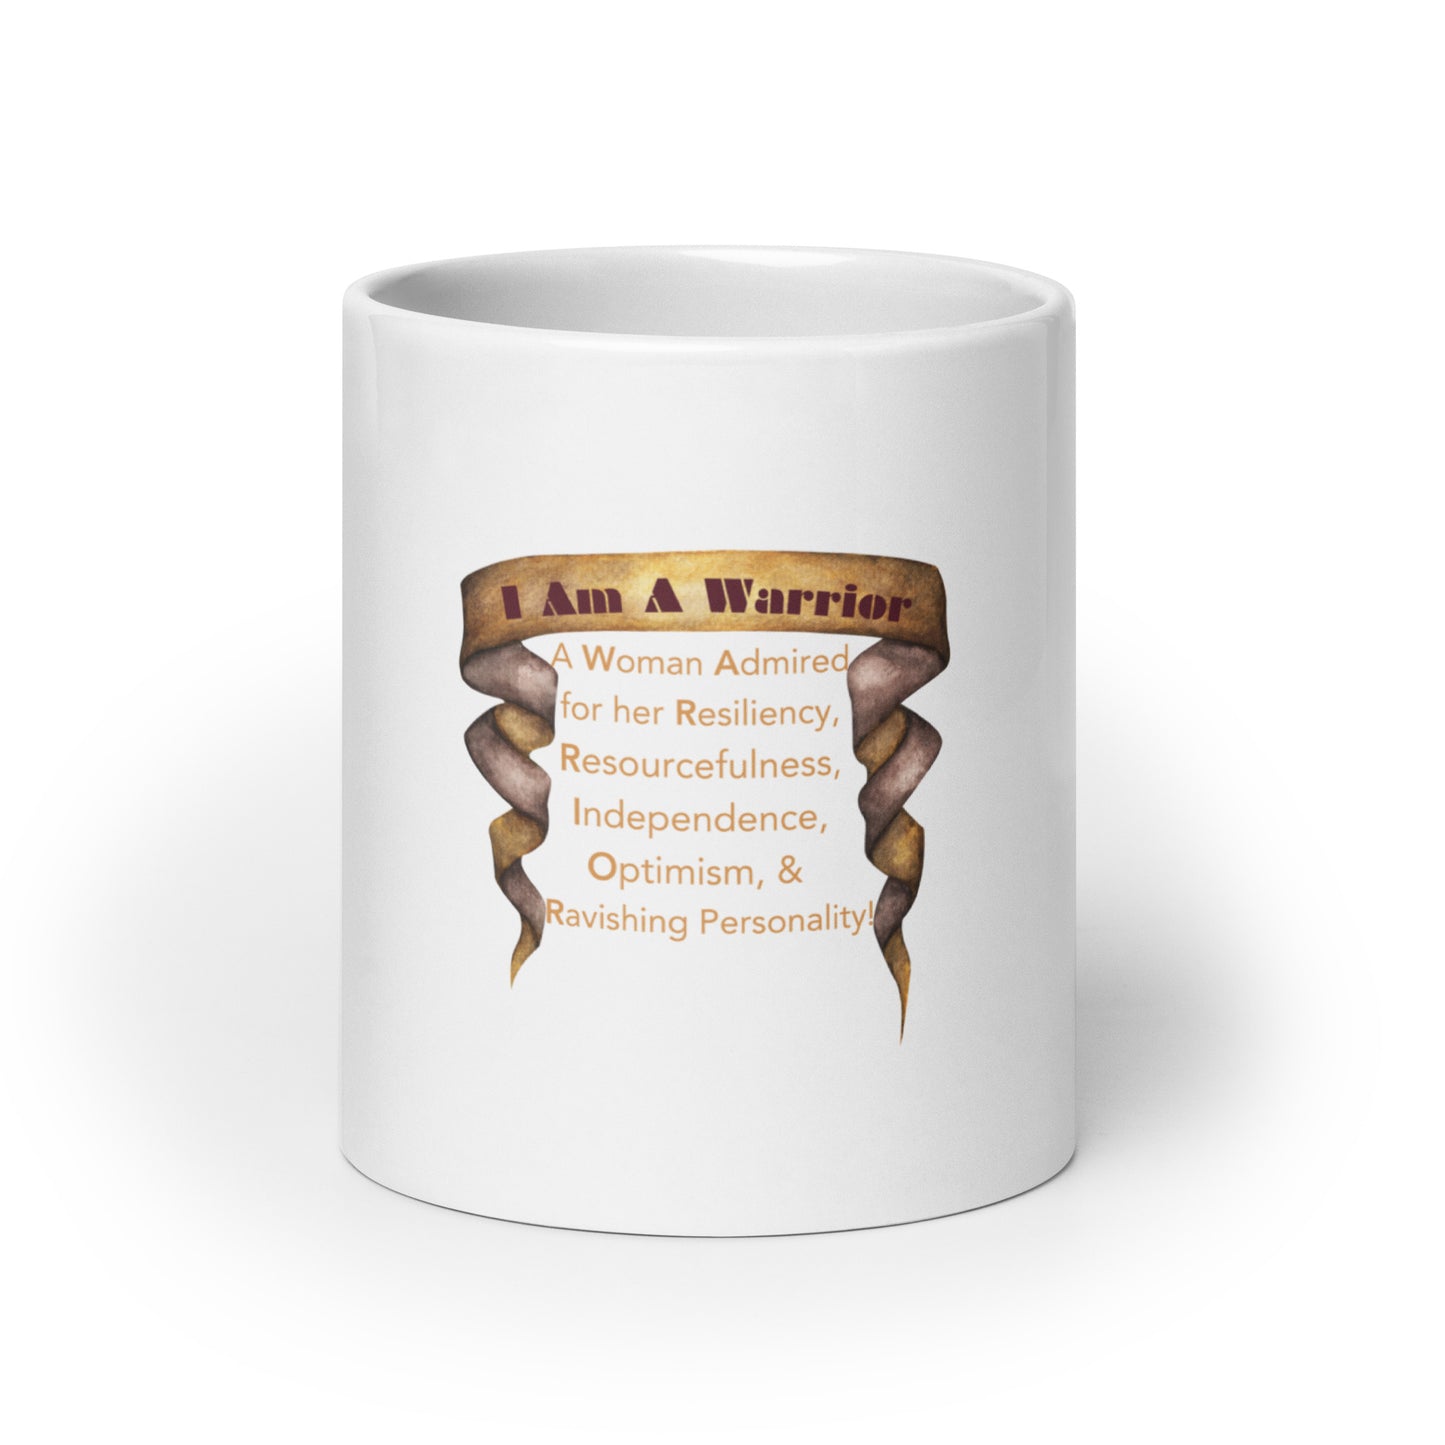 WARRIOR - White glossy mug